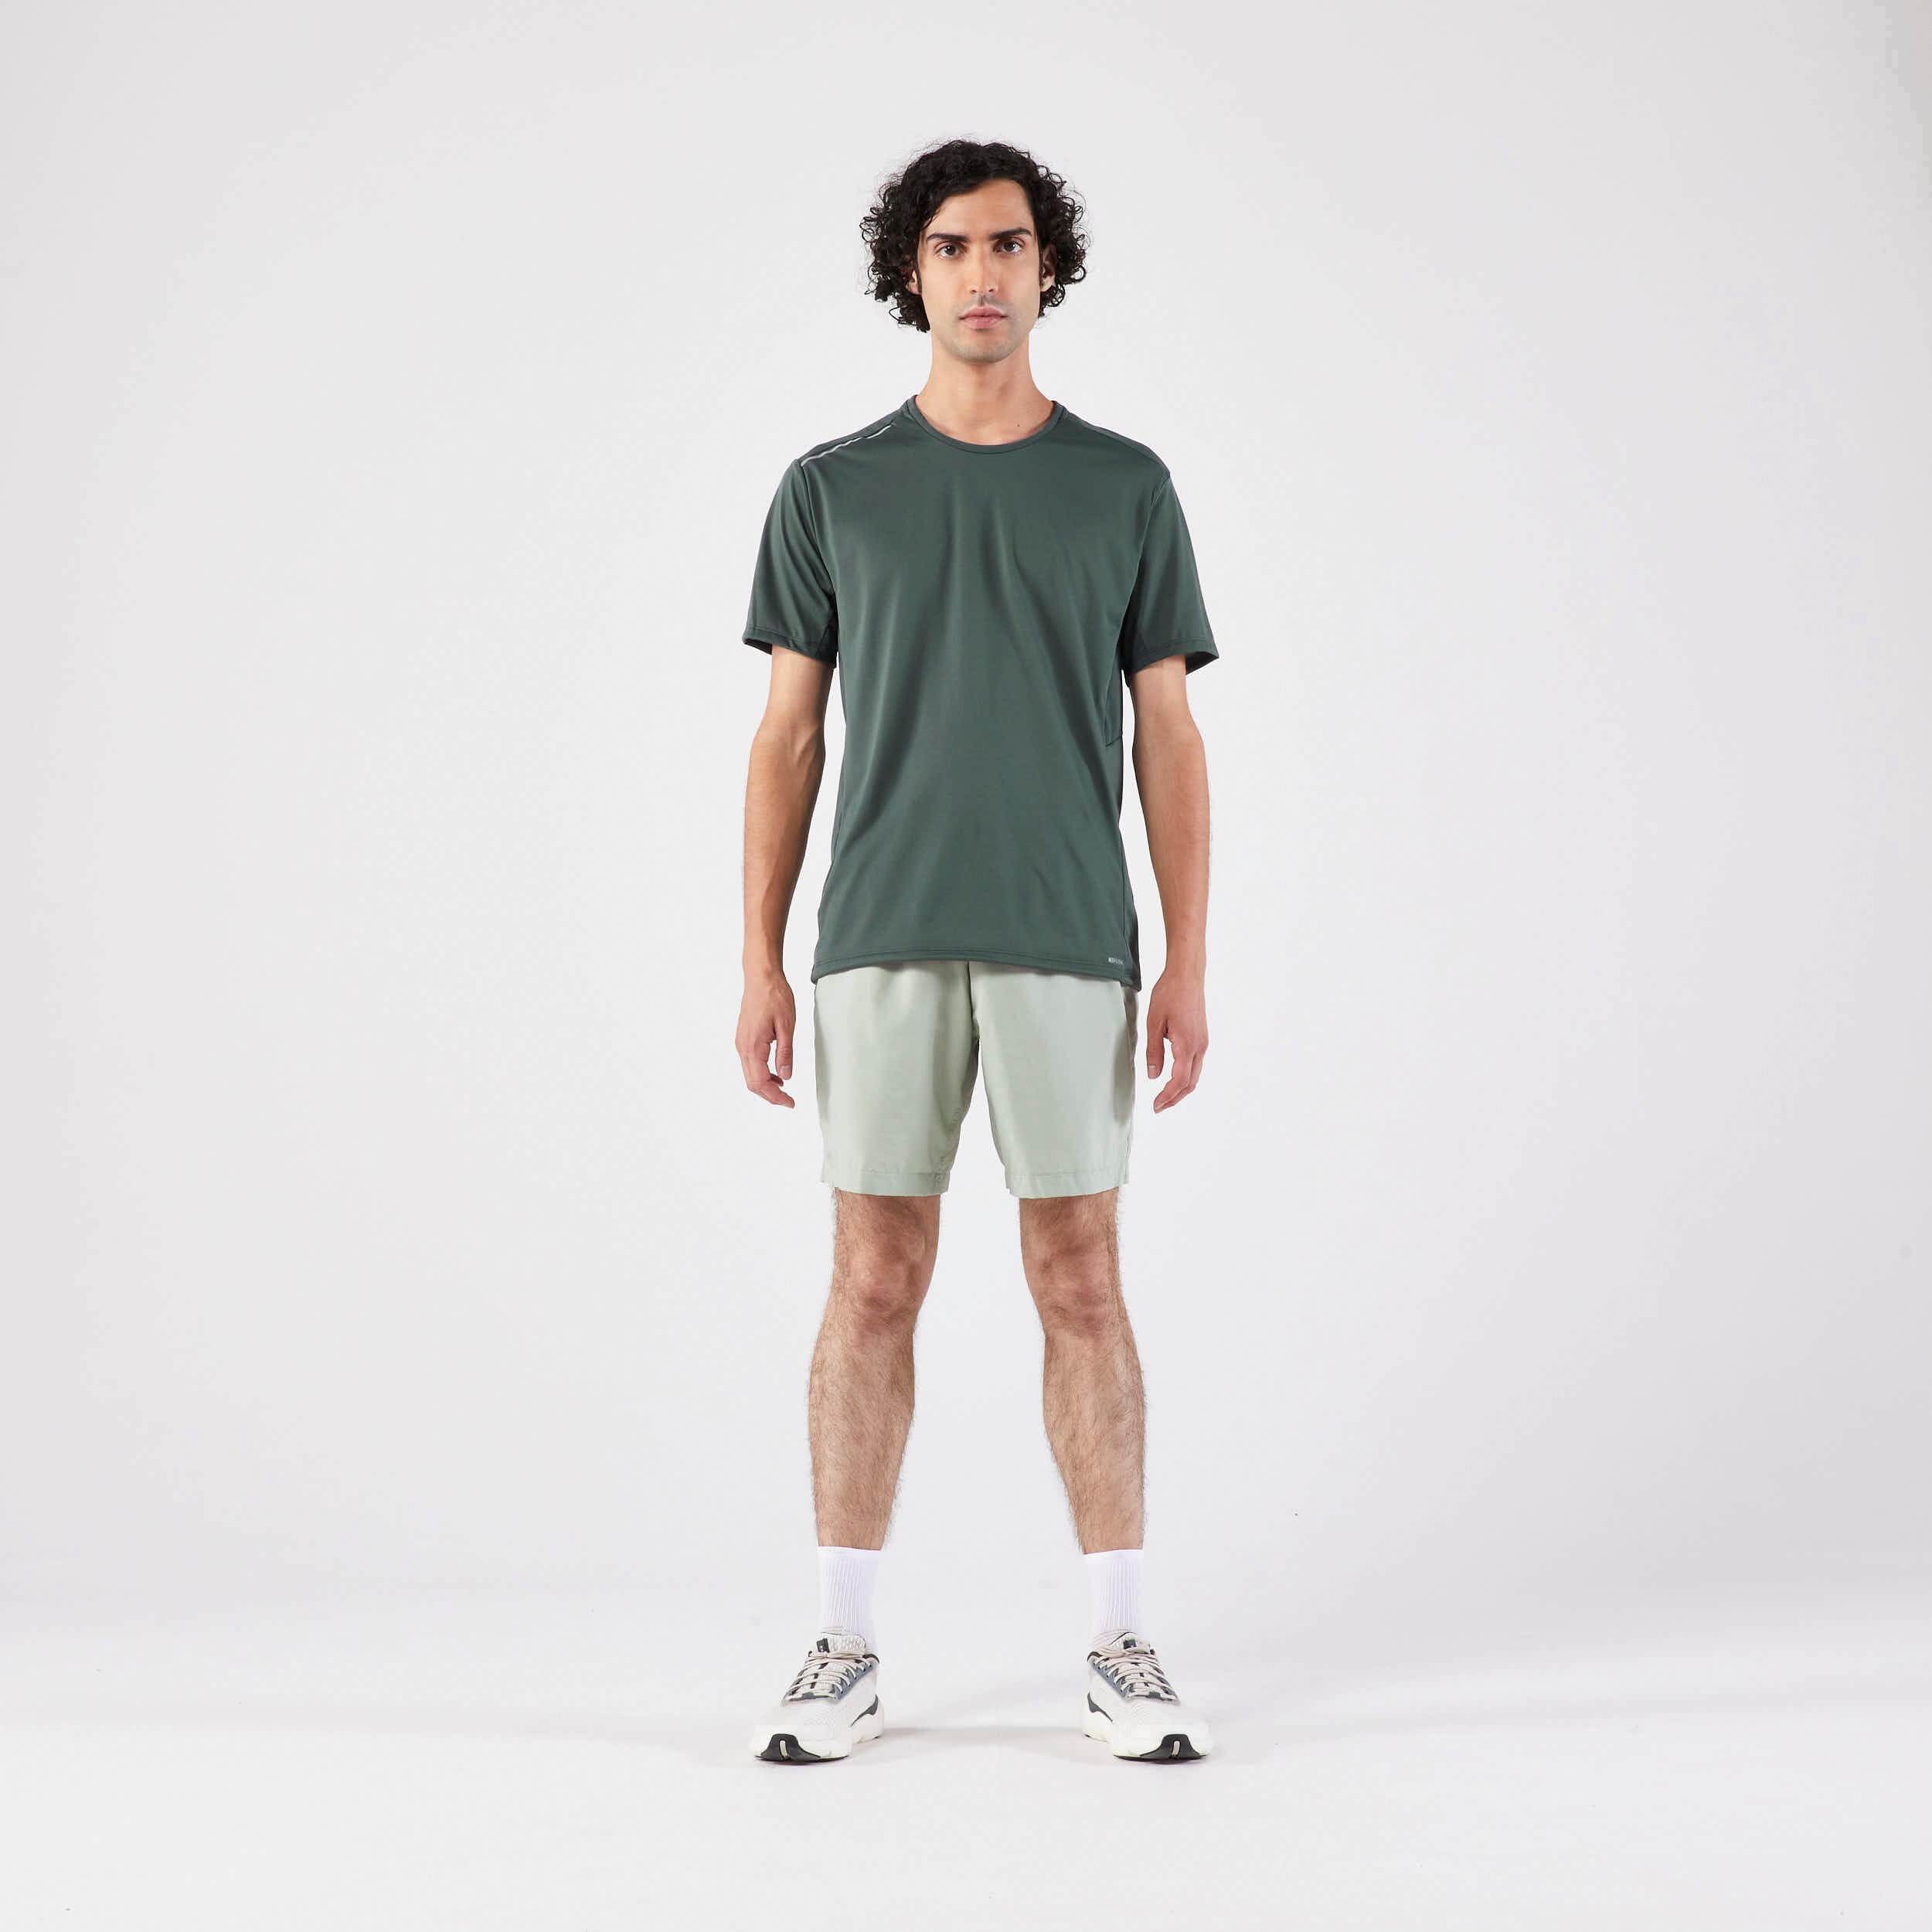 Dry+ Men's Running Breathable Tee-Shirt - Dark Green 2/5